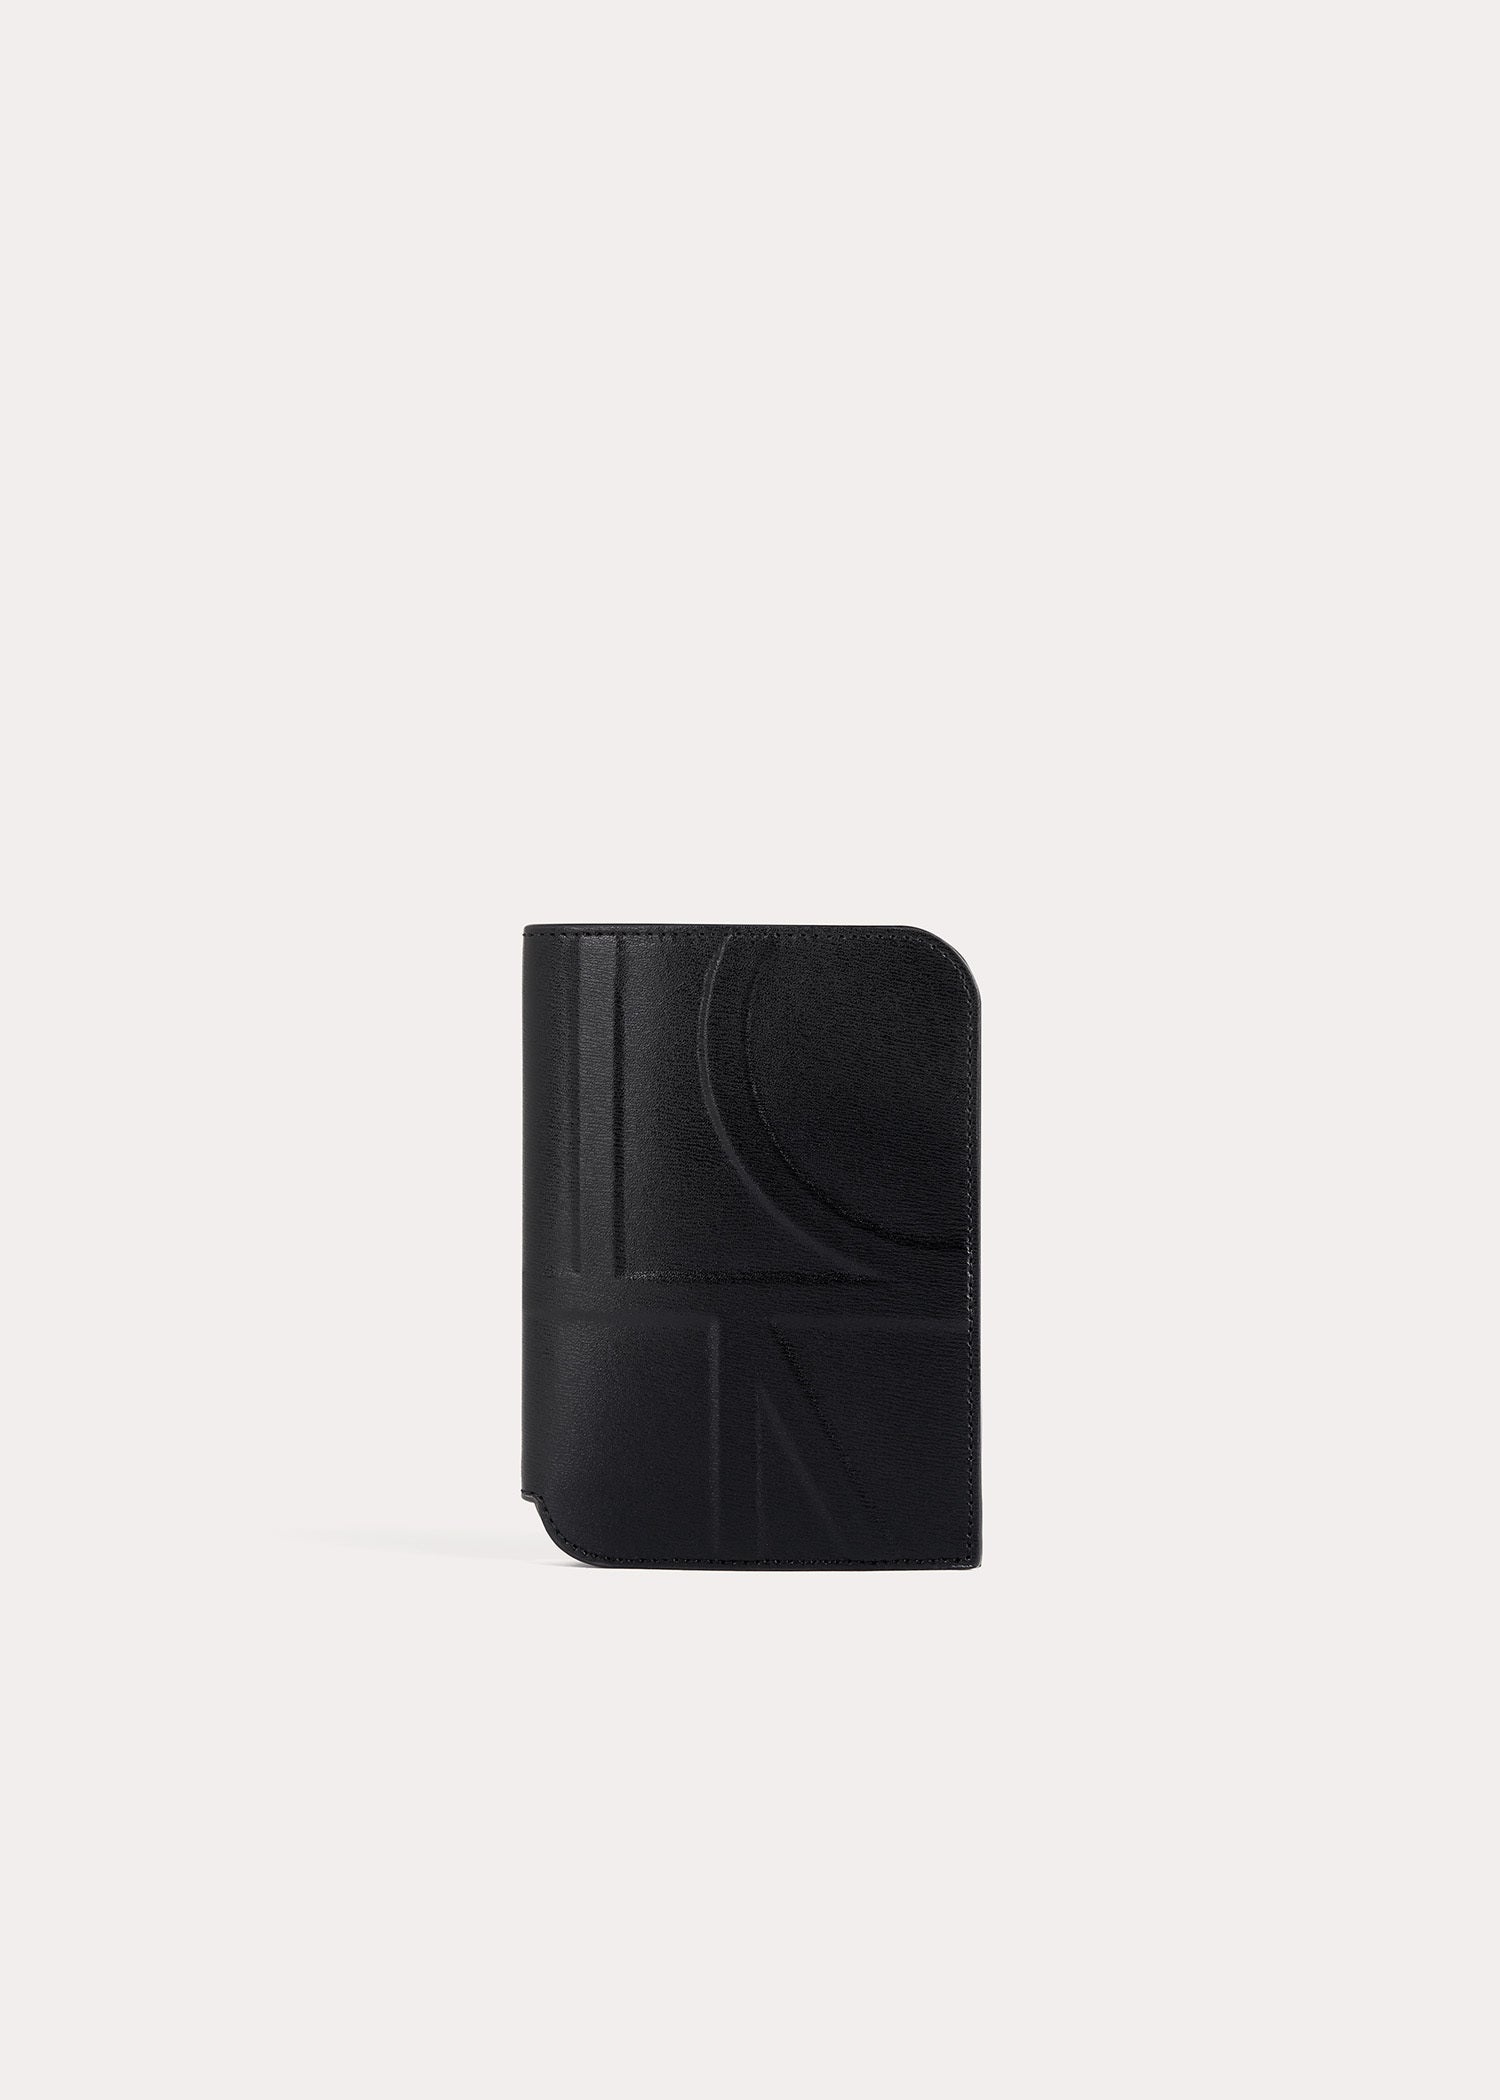 Monogram leather passport holder black - 4